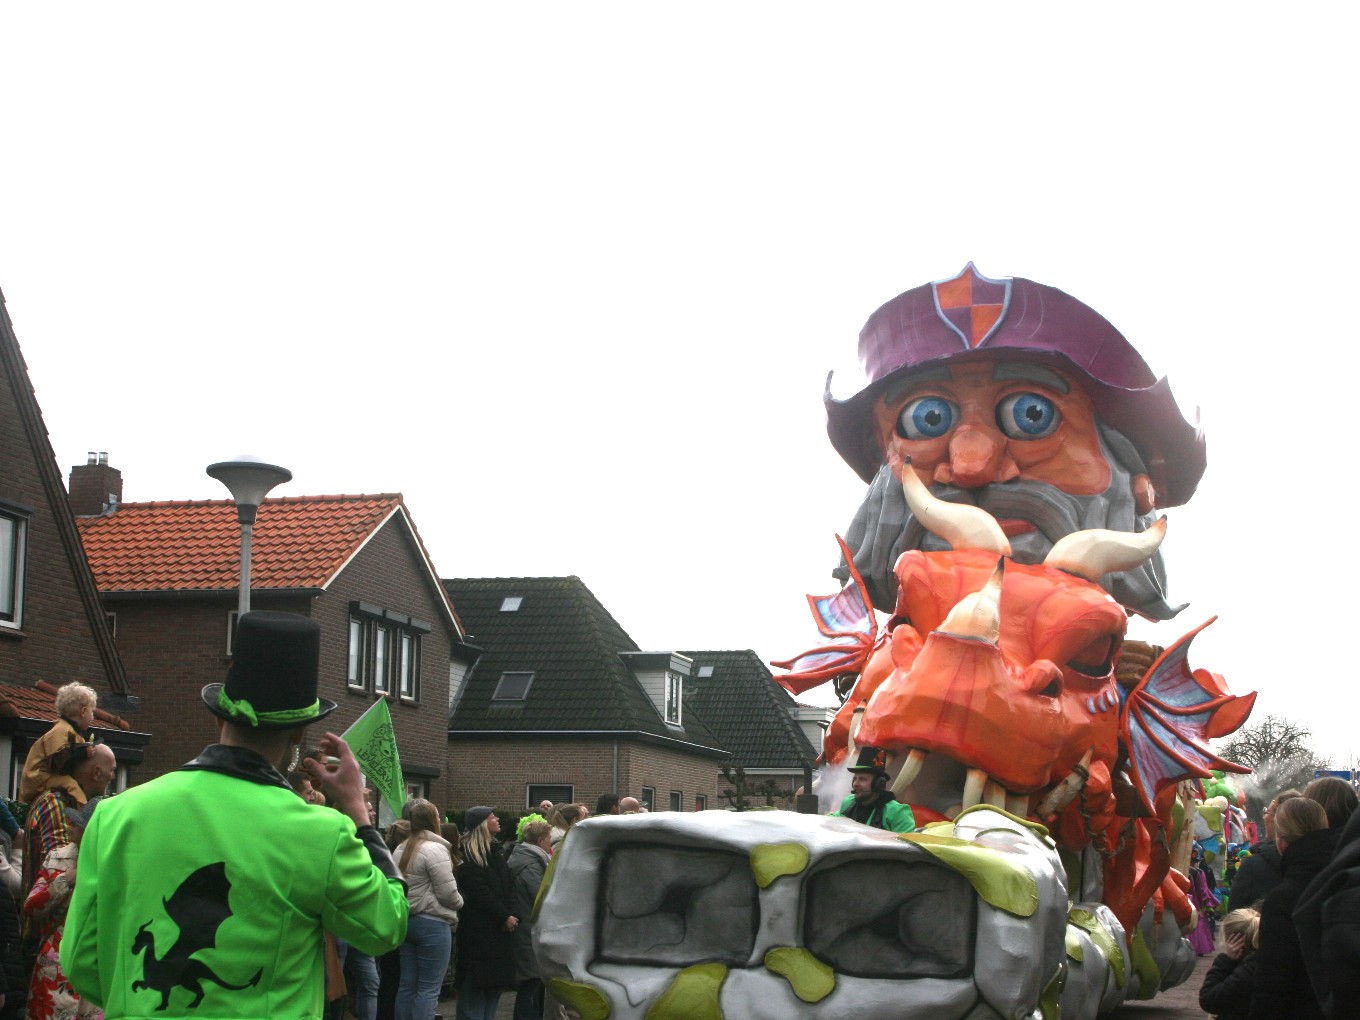 ‘Carnaval meer dan een feestje’ in Lemelerveld